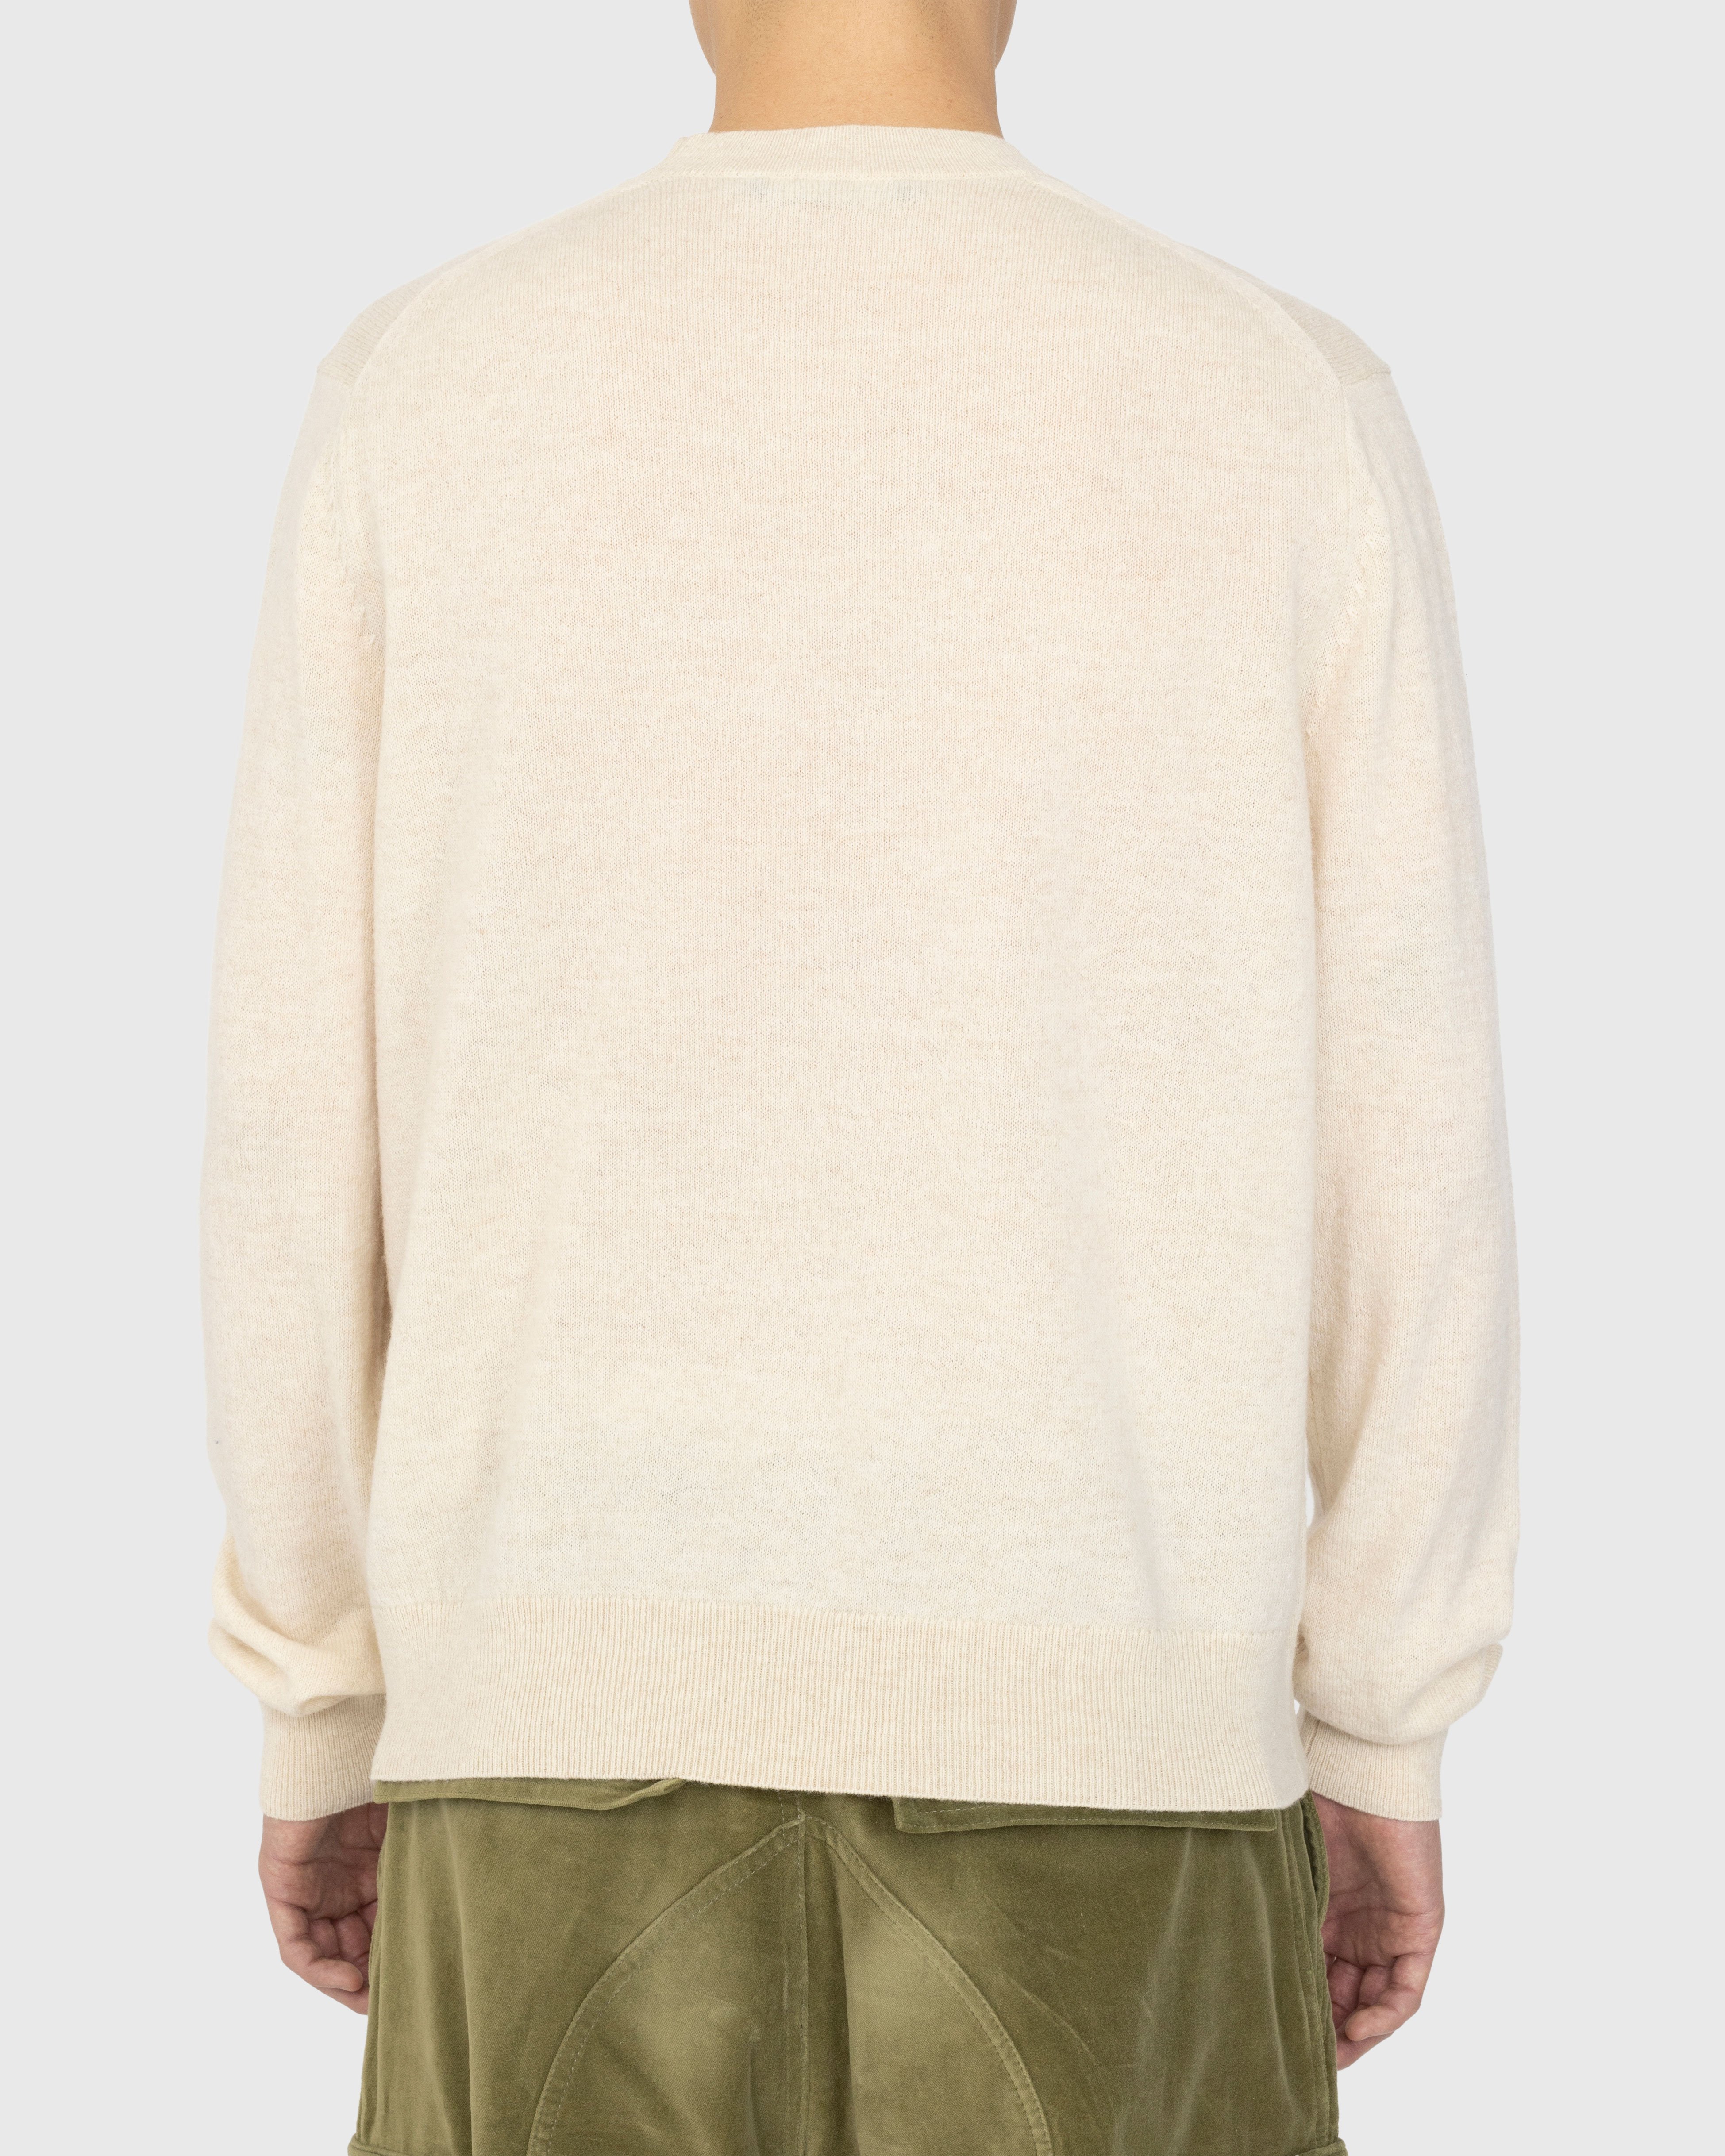 Acne Studios - Wool Crewneck Sweater Oatmeal Melange - Clothing - Beige - Image 4